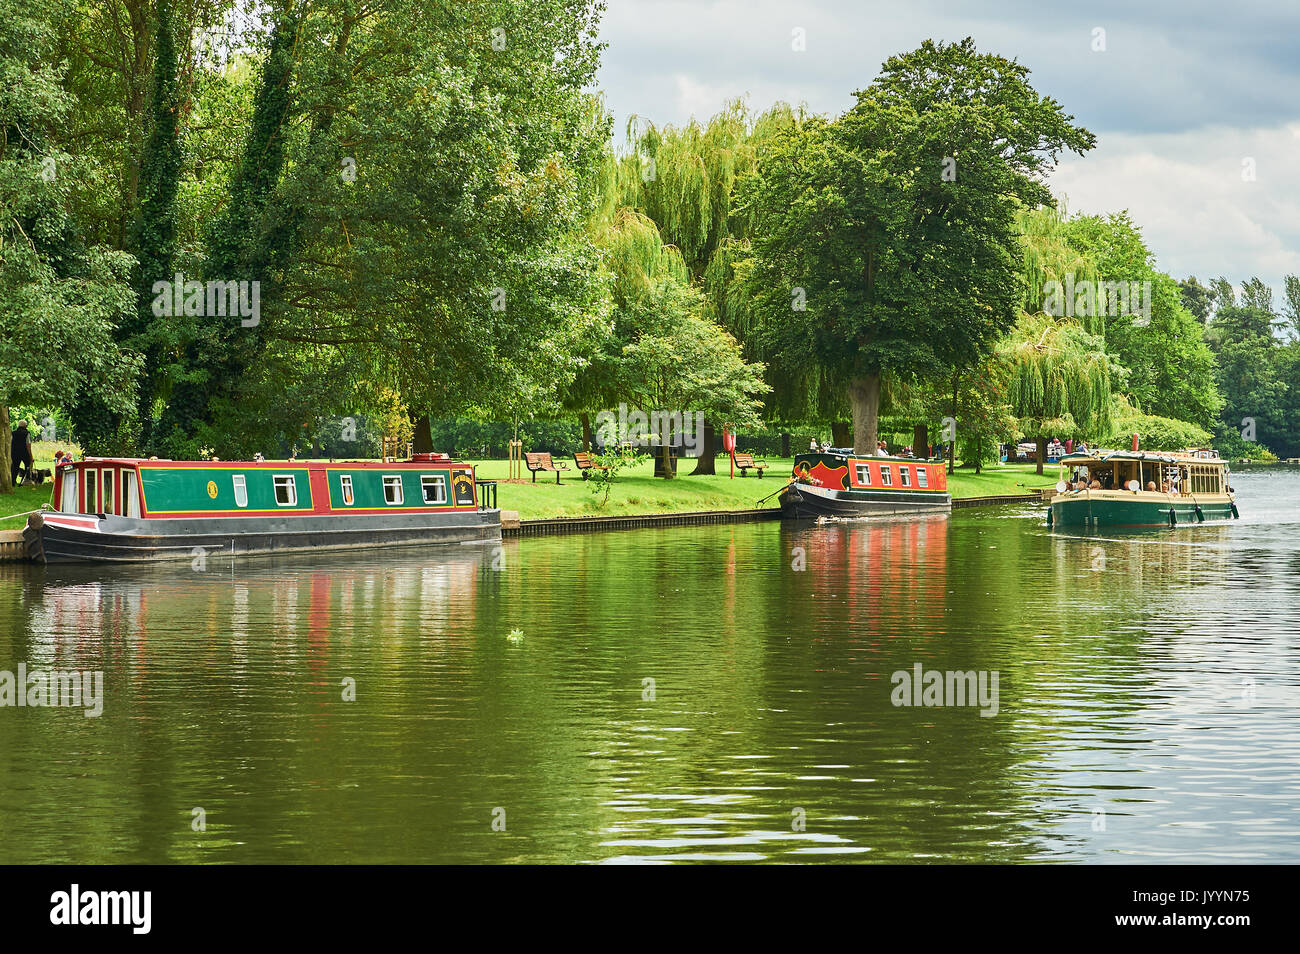 Tourist pleasure boats on the River Avon in Stratford upon Avon, Warwickshire Stock Photo